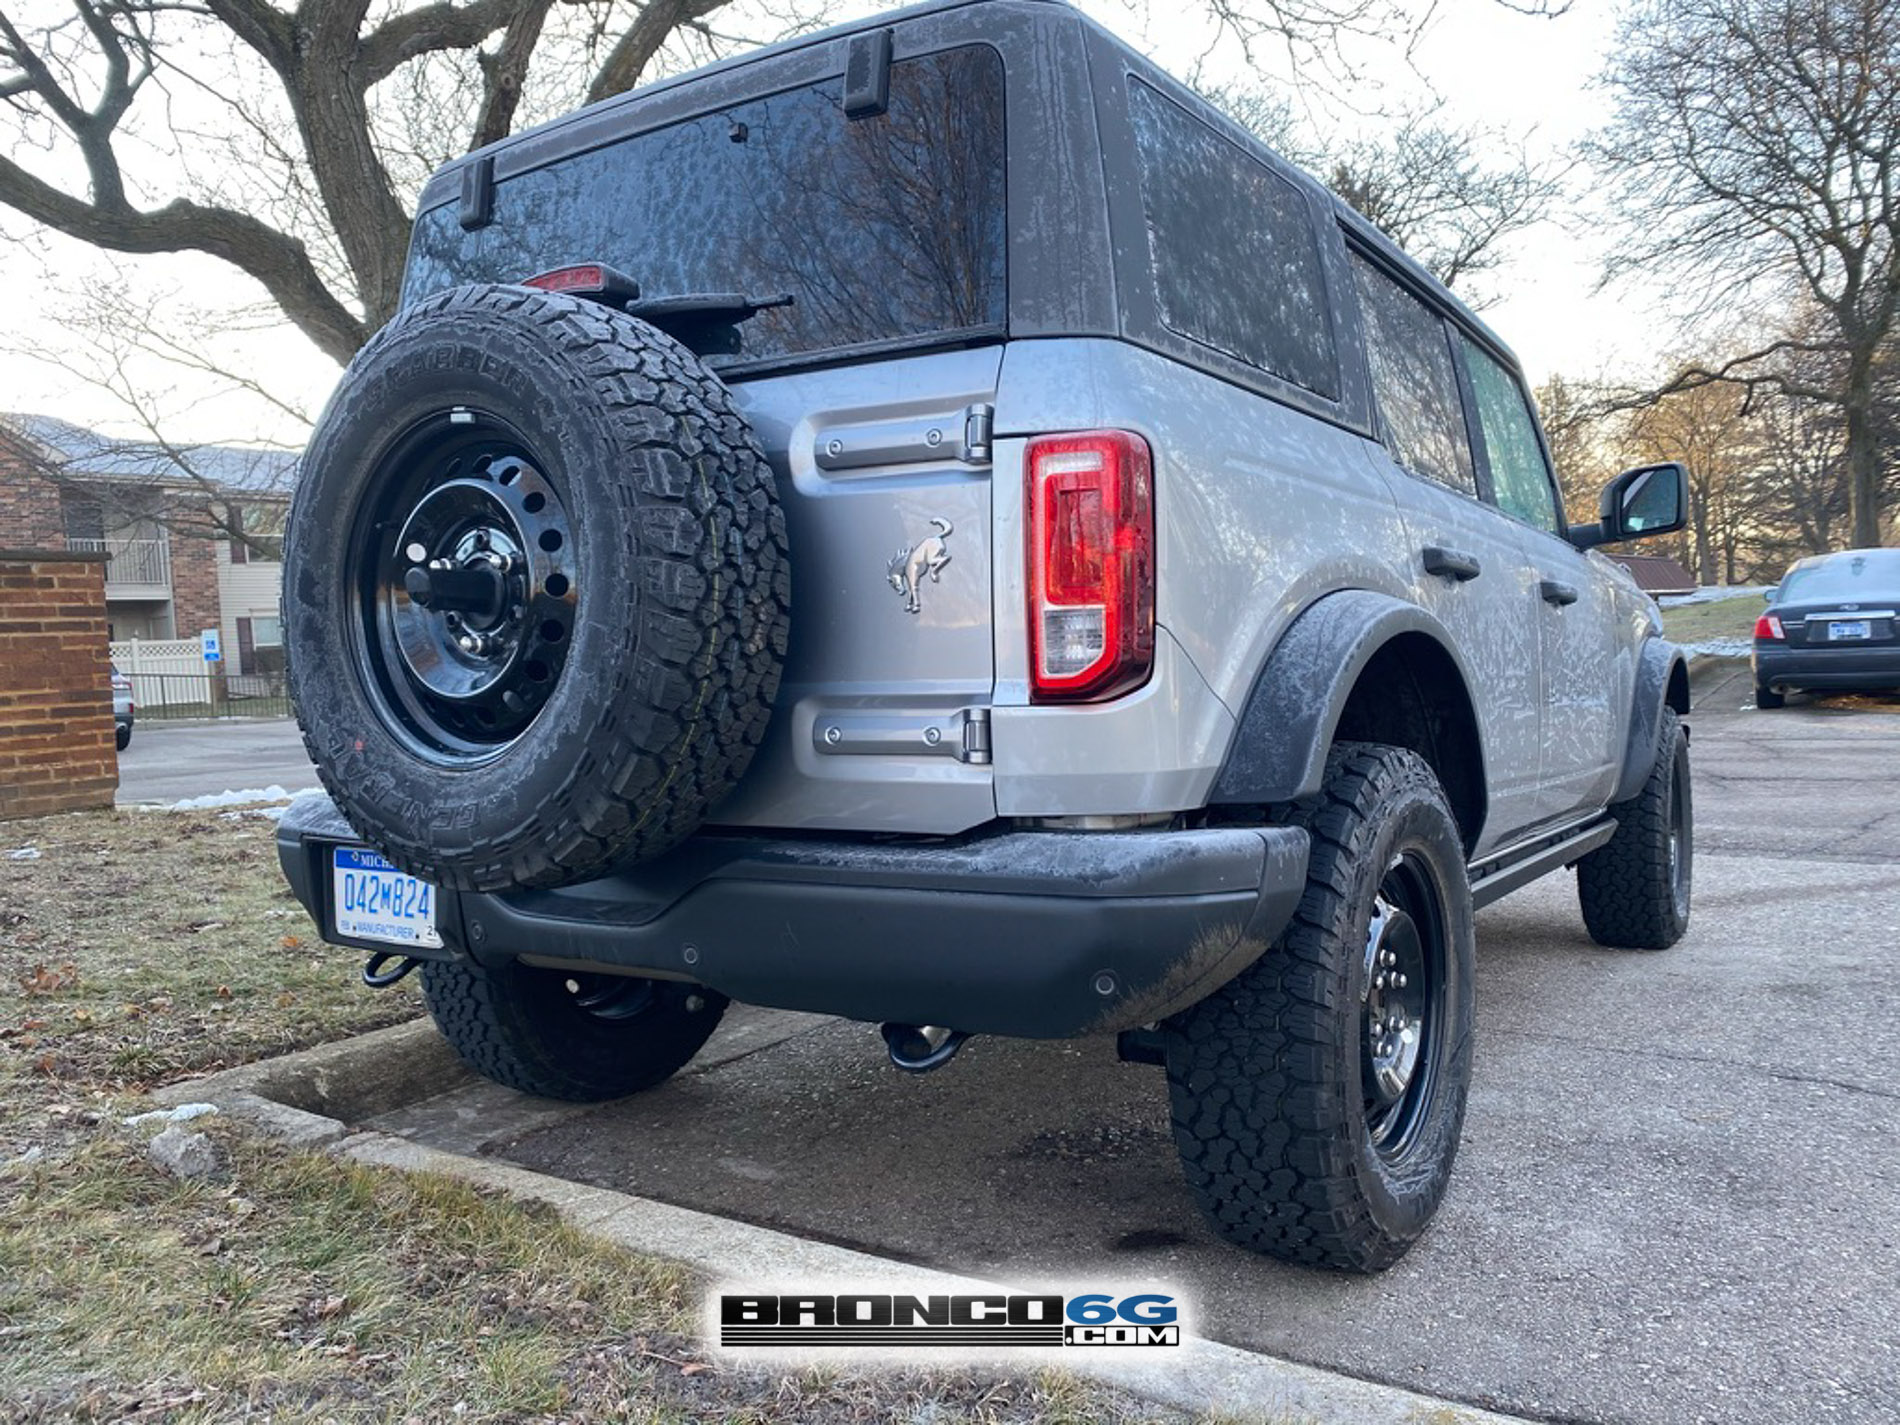 Ford Bronco Ultimate Black Diamond Non-Sasquatch pics thread 44471D3B-C694-4125-86D5-5EFD8B6FF3B9